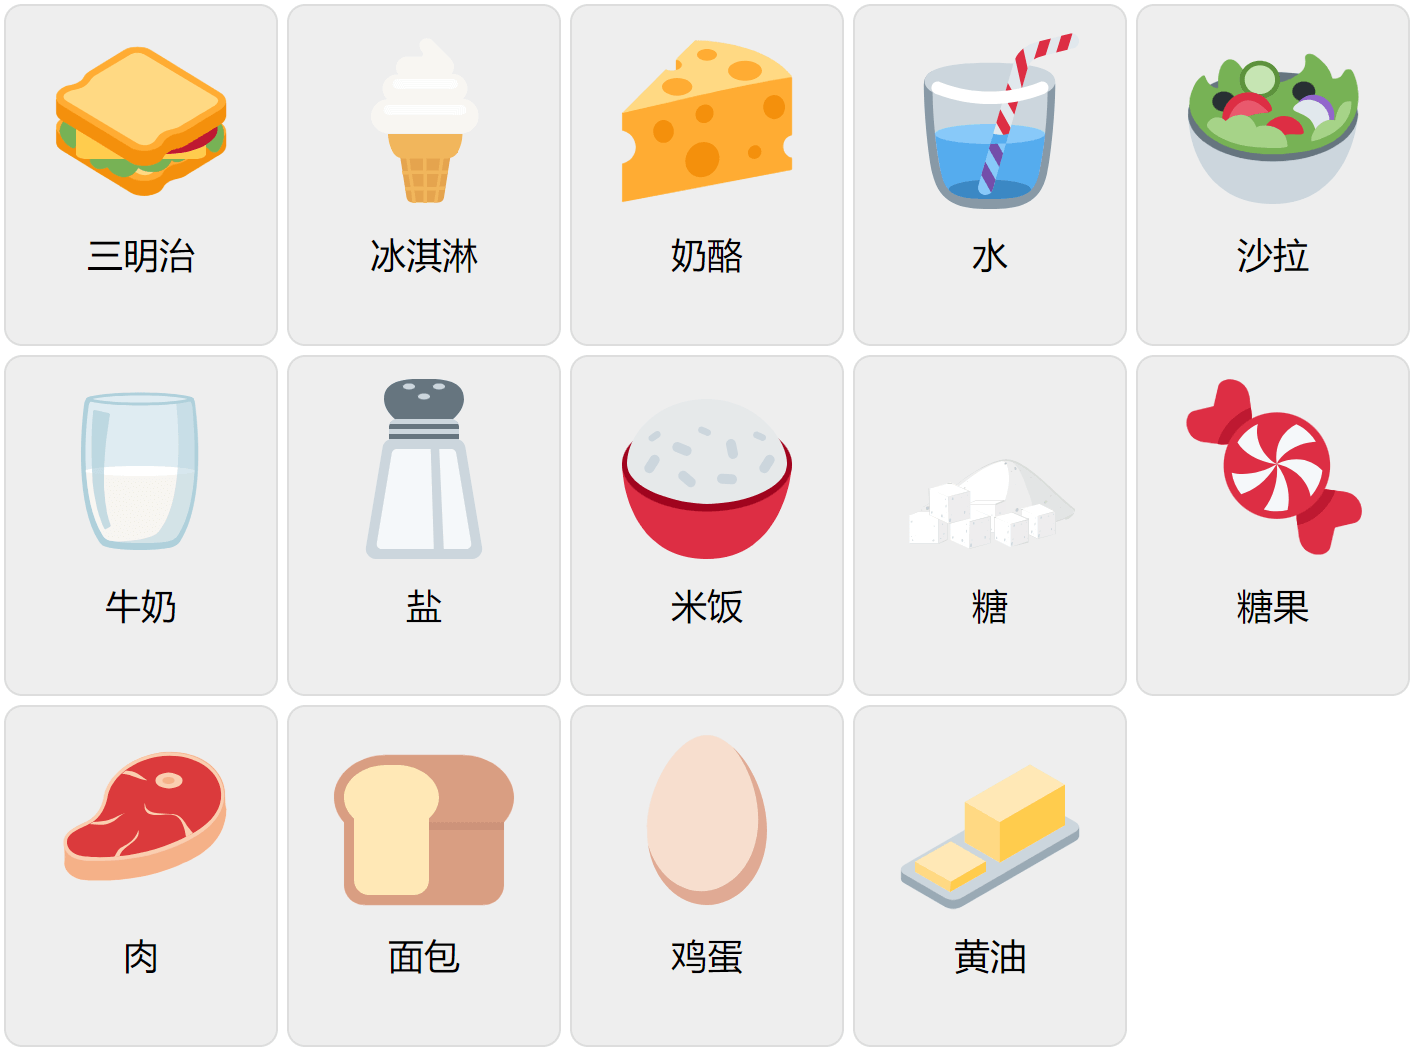 Еда на китайском языке 1